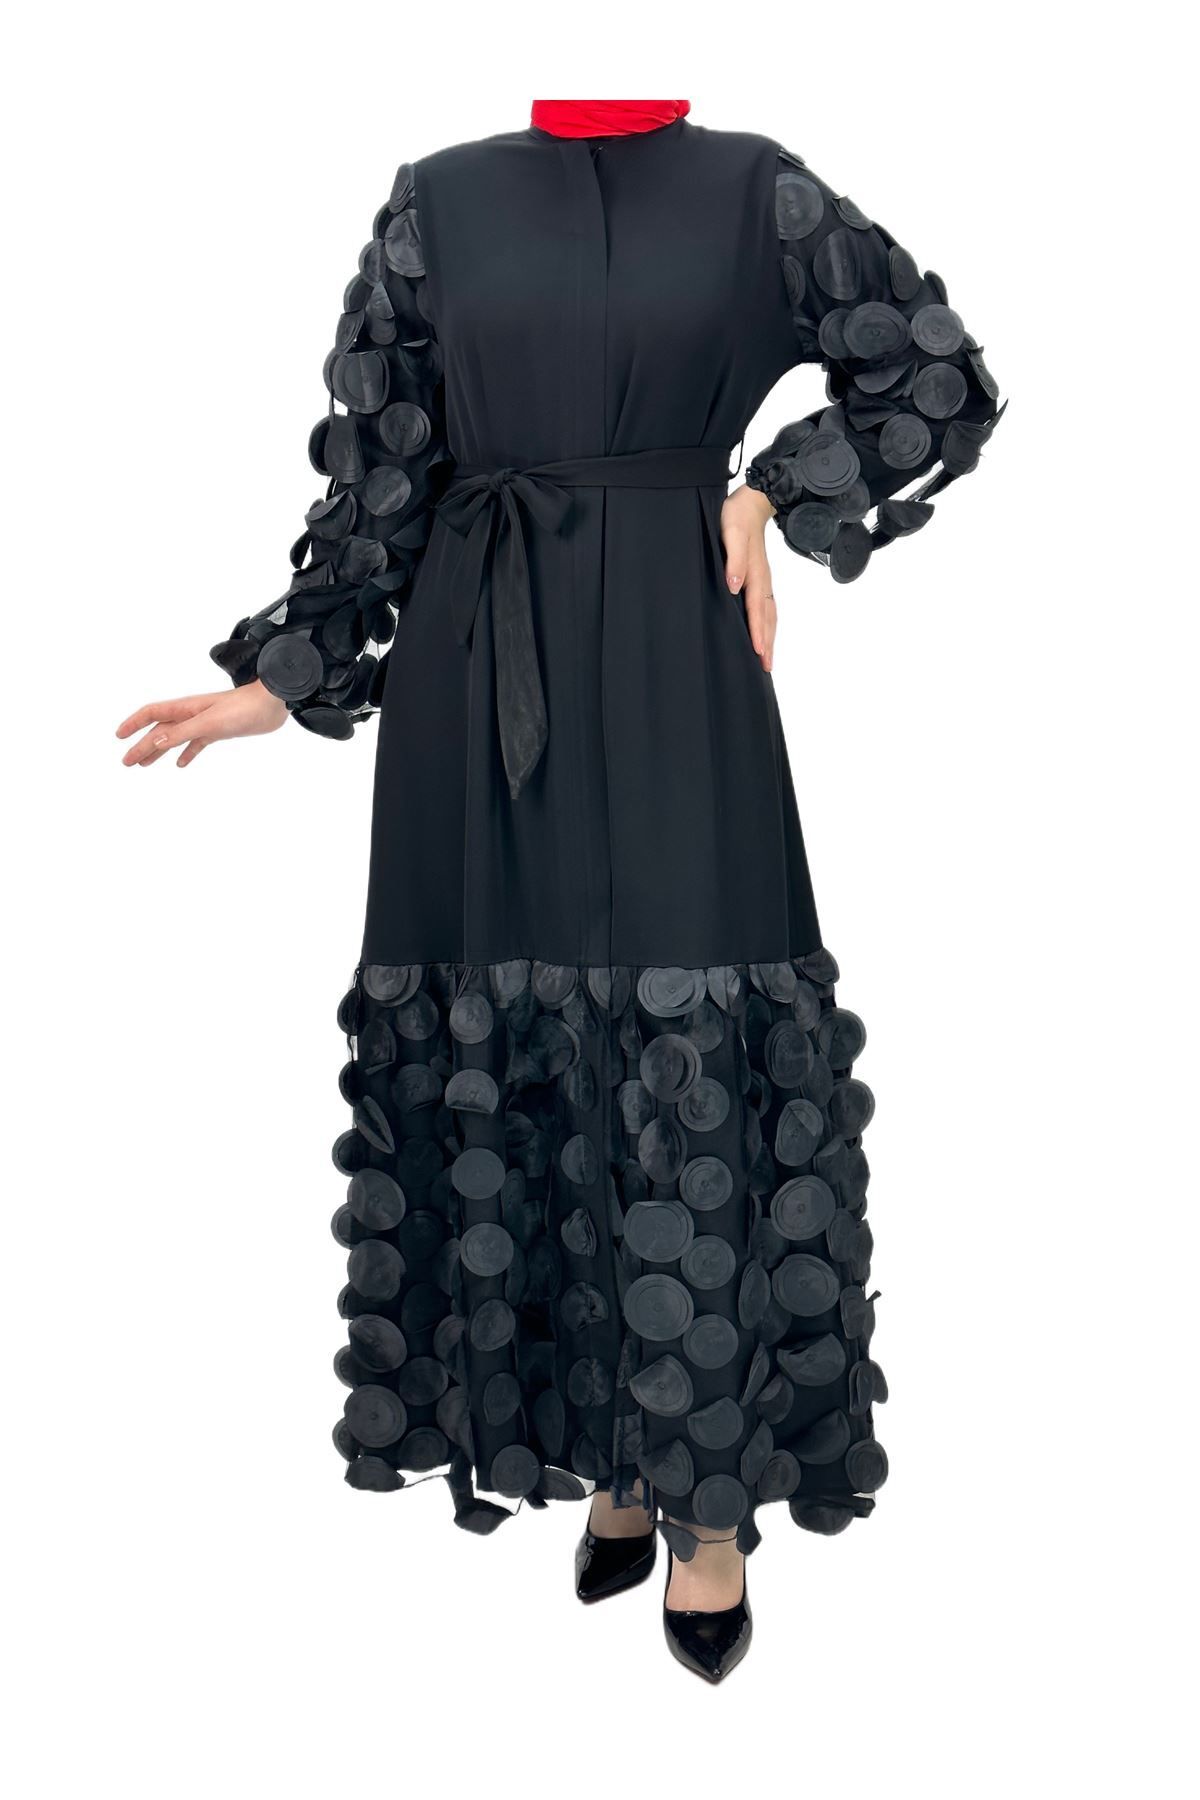 ottoman wear OTW5202 Medine İpeği Ferace Siyah